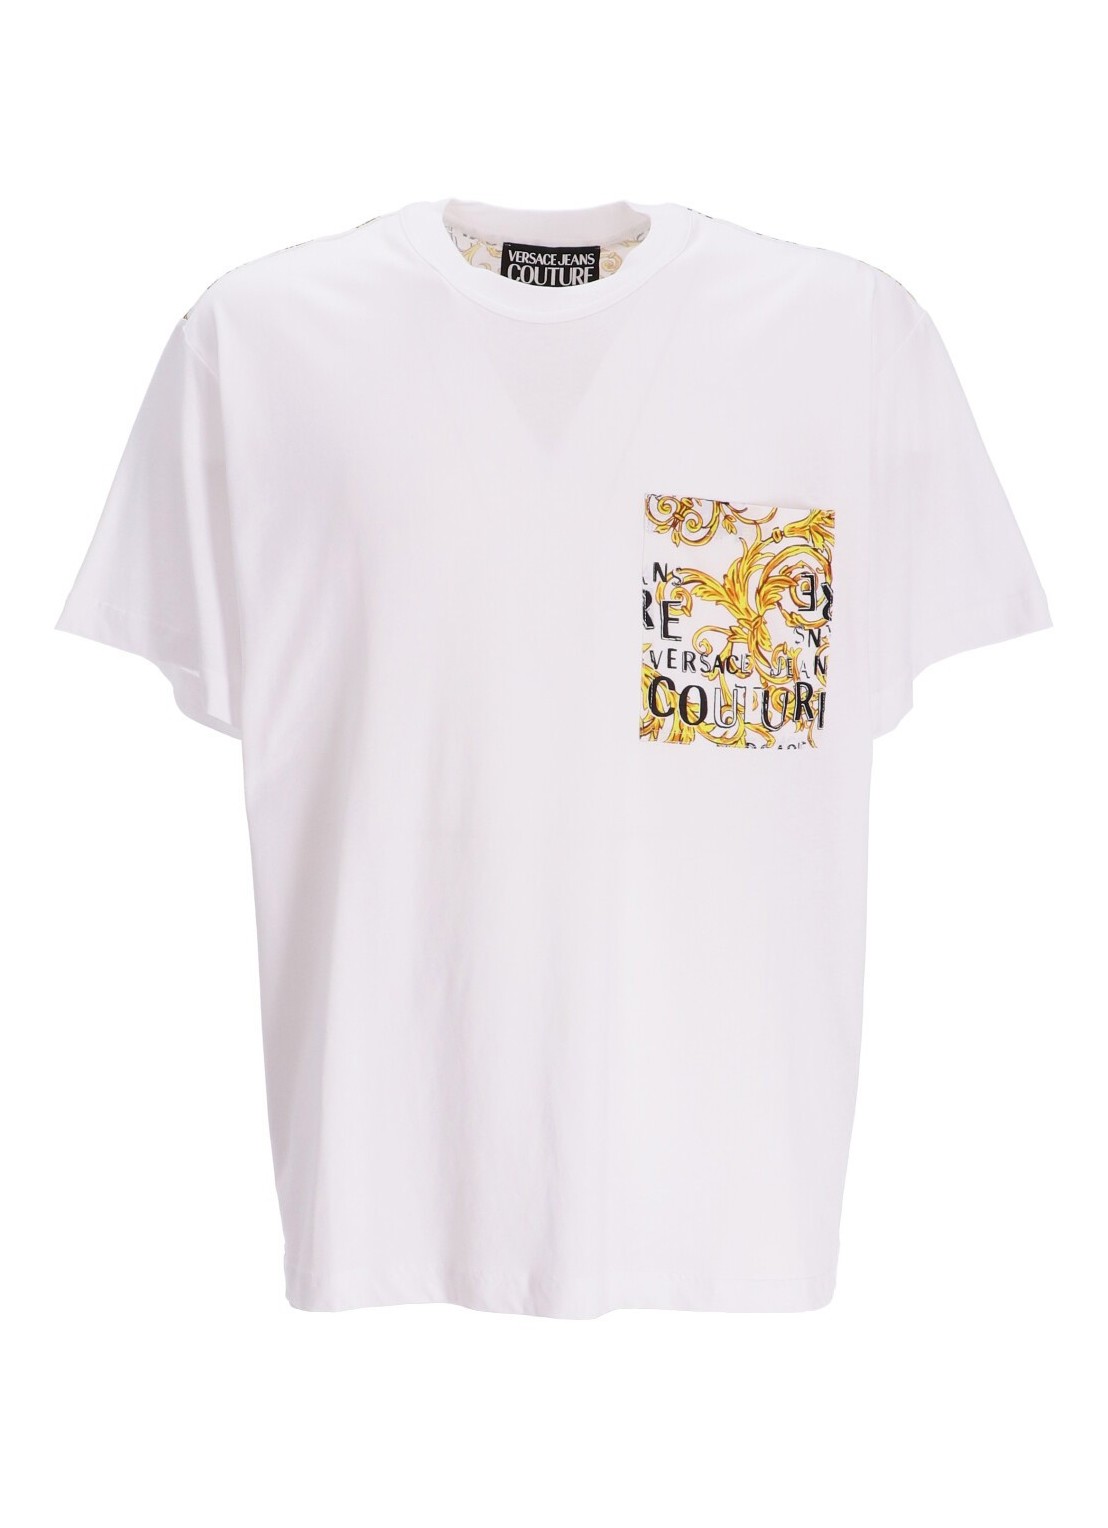 Camiseta versace t-shirt man 74up601 r pkt con logo baroque t-shirt 74gah6r0 g03 talla blanco
 